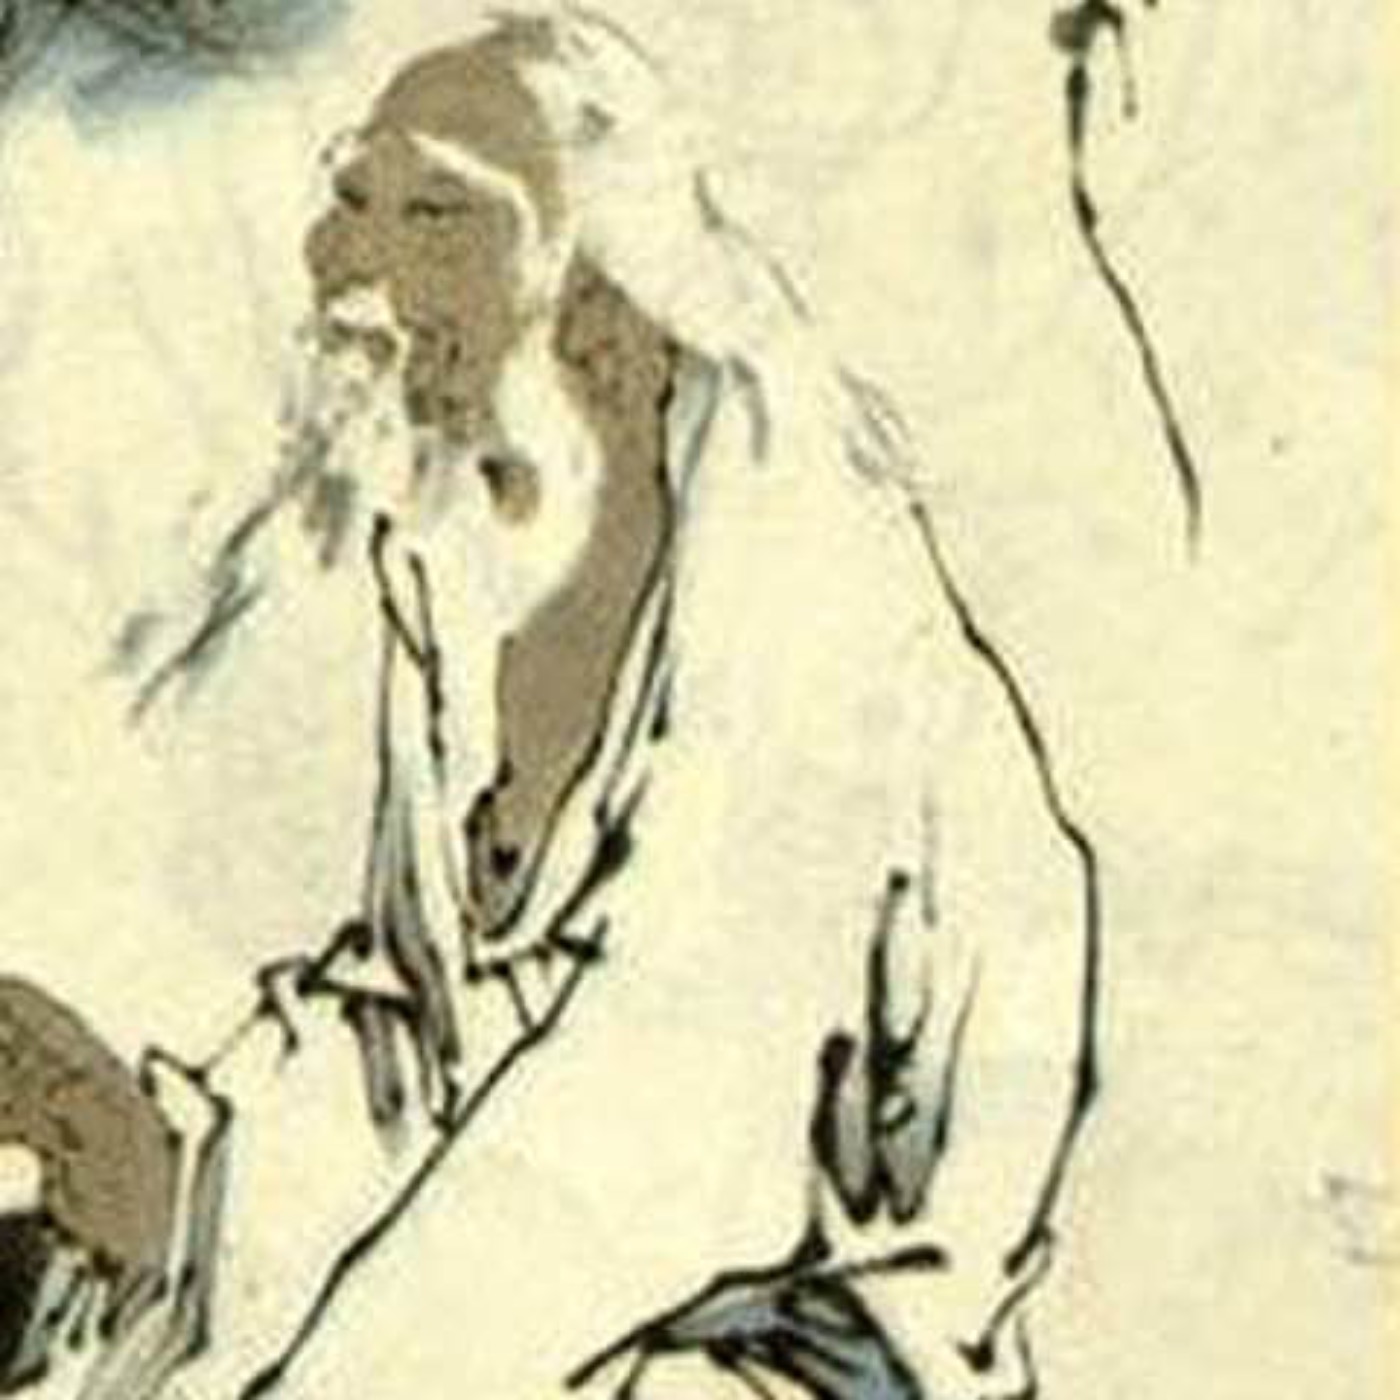 Zhuangzi - The Sage of Uncertainty